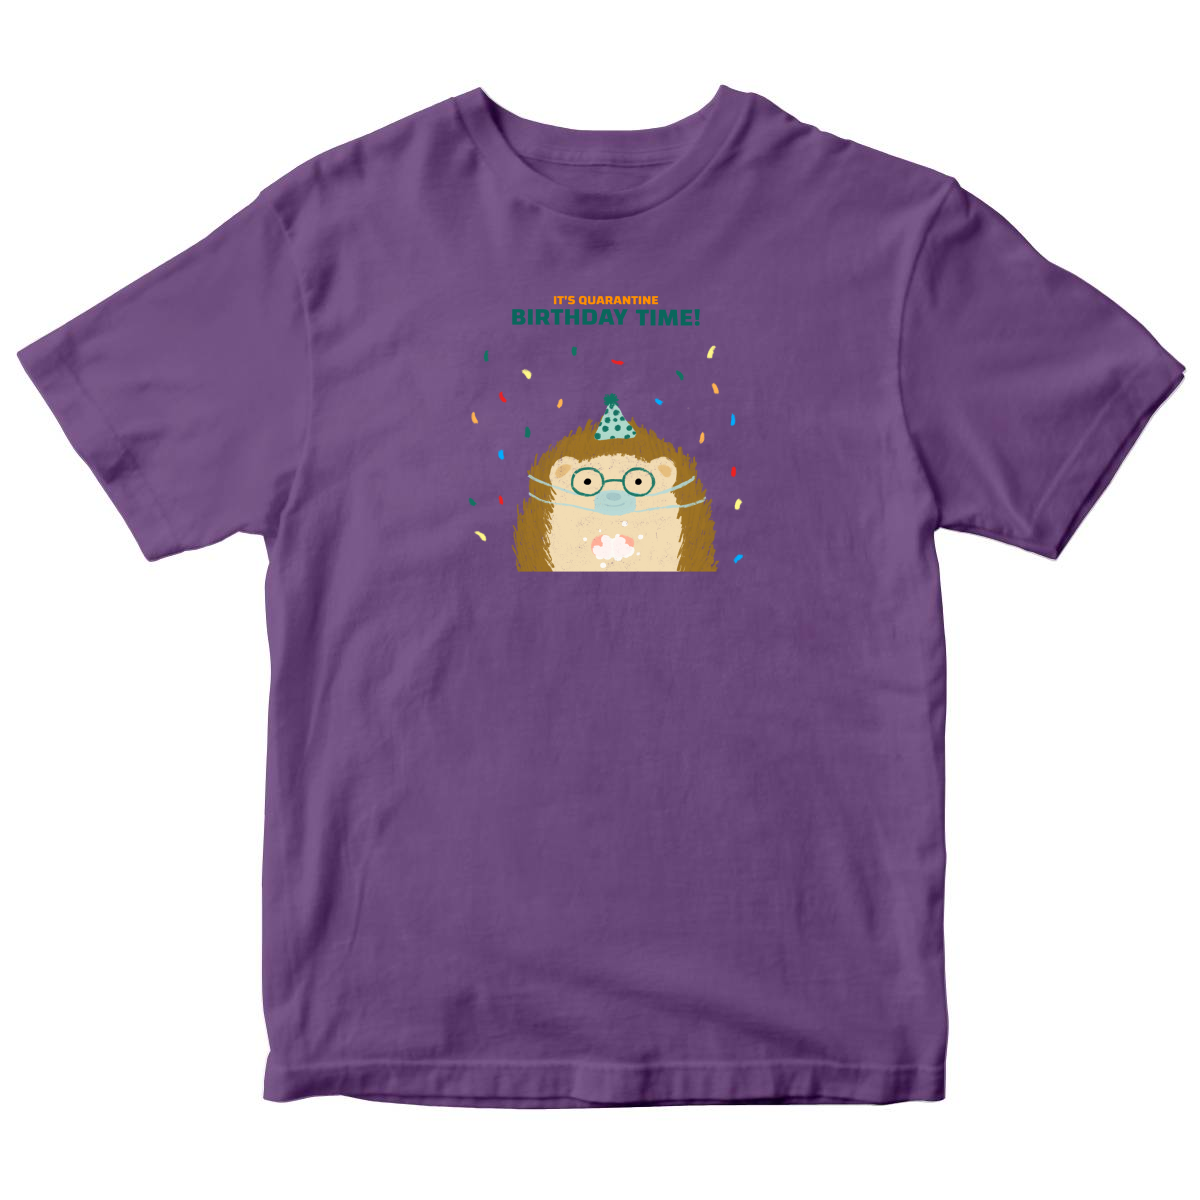 It is quarantine birthday time Toddler T-shirt | Purple